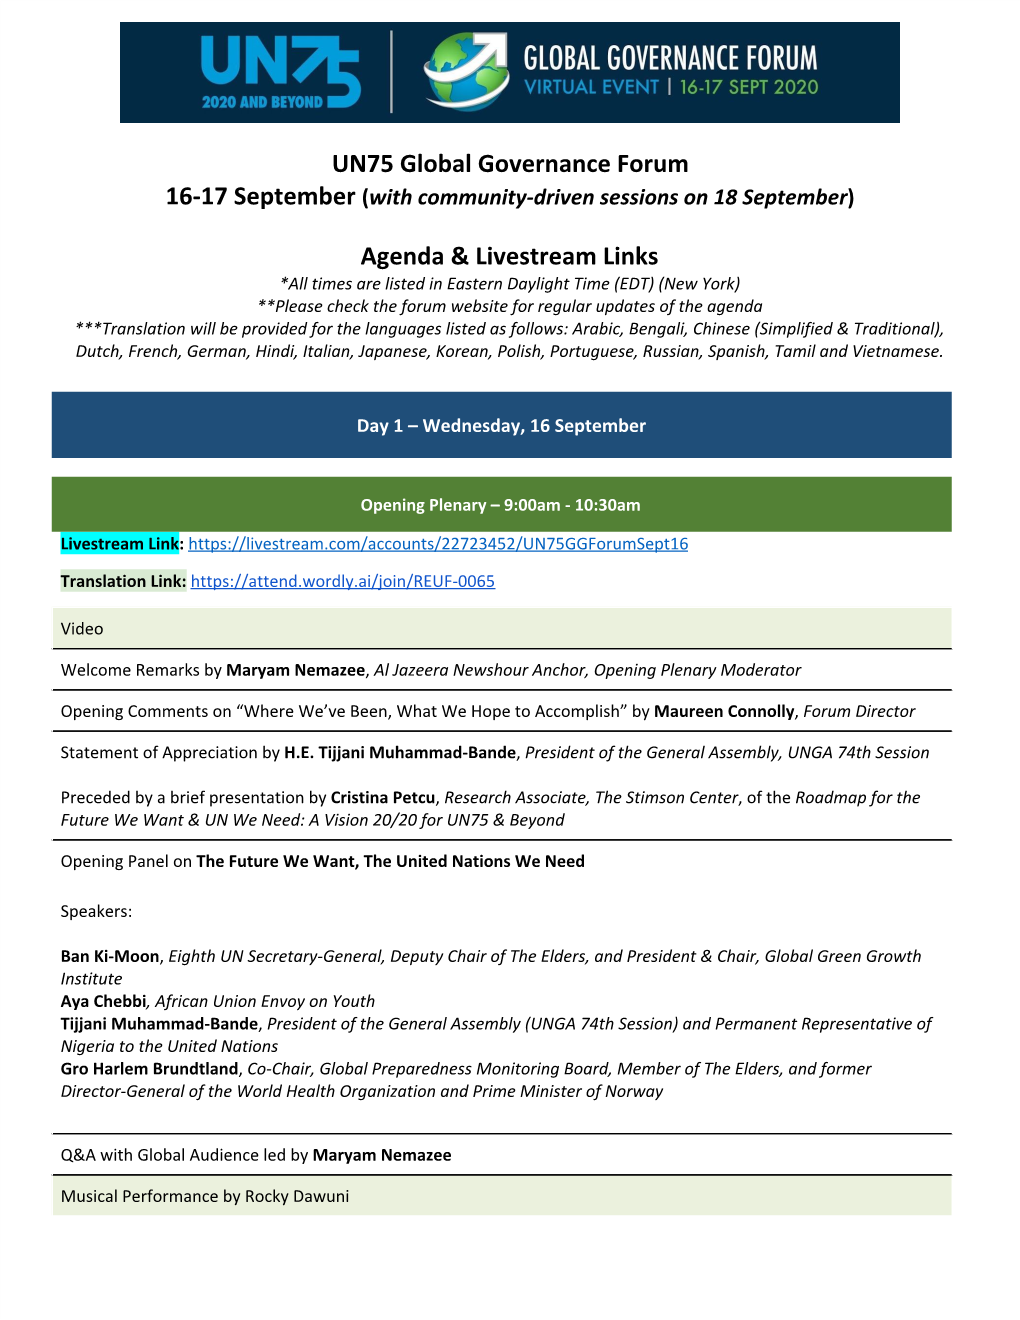 UN75 Global Governance Forum Agenda & Livestream Links